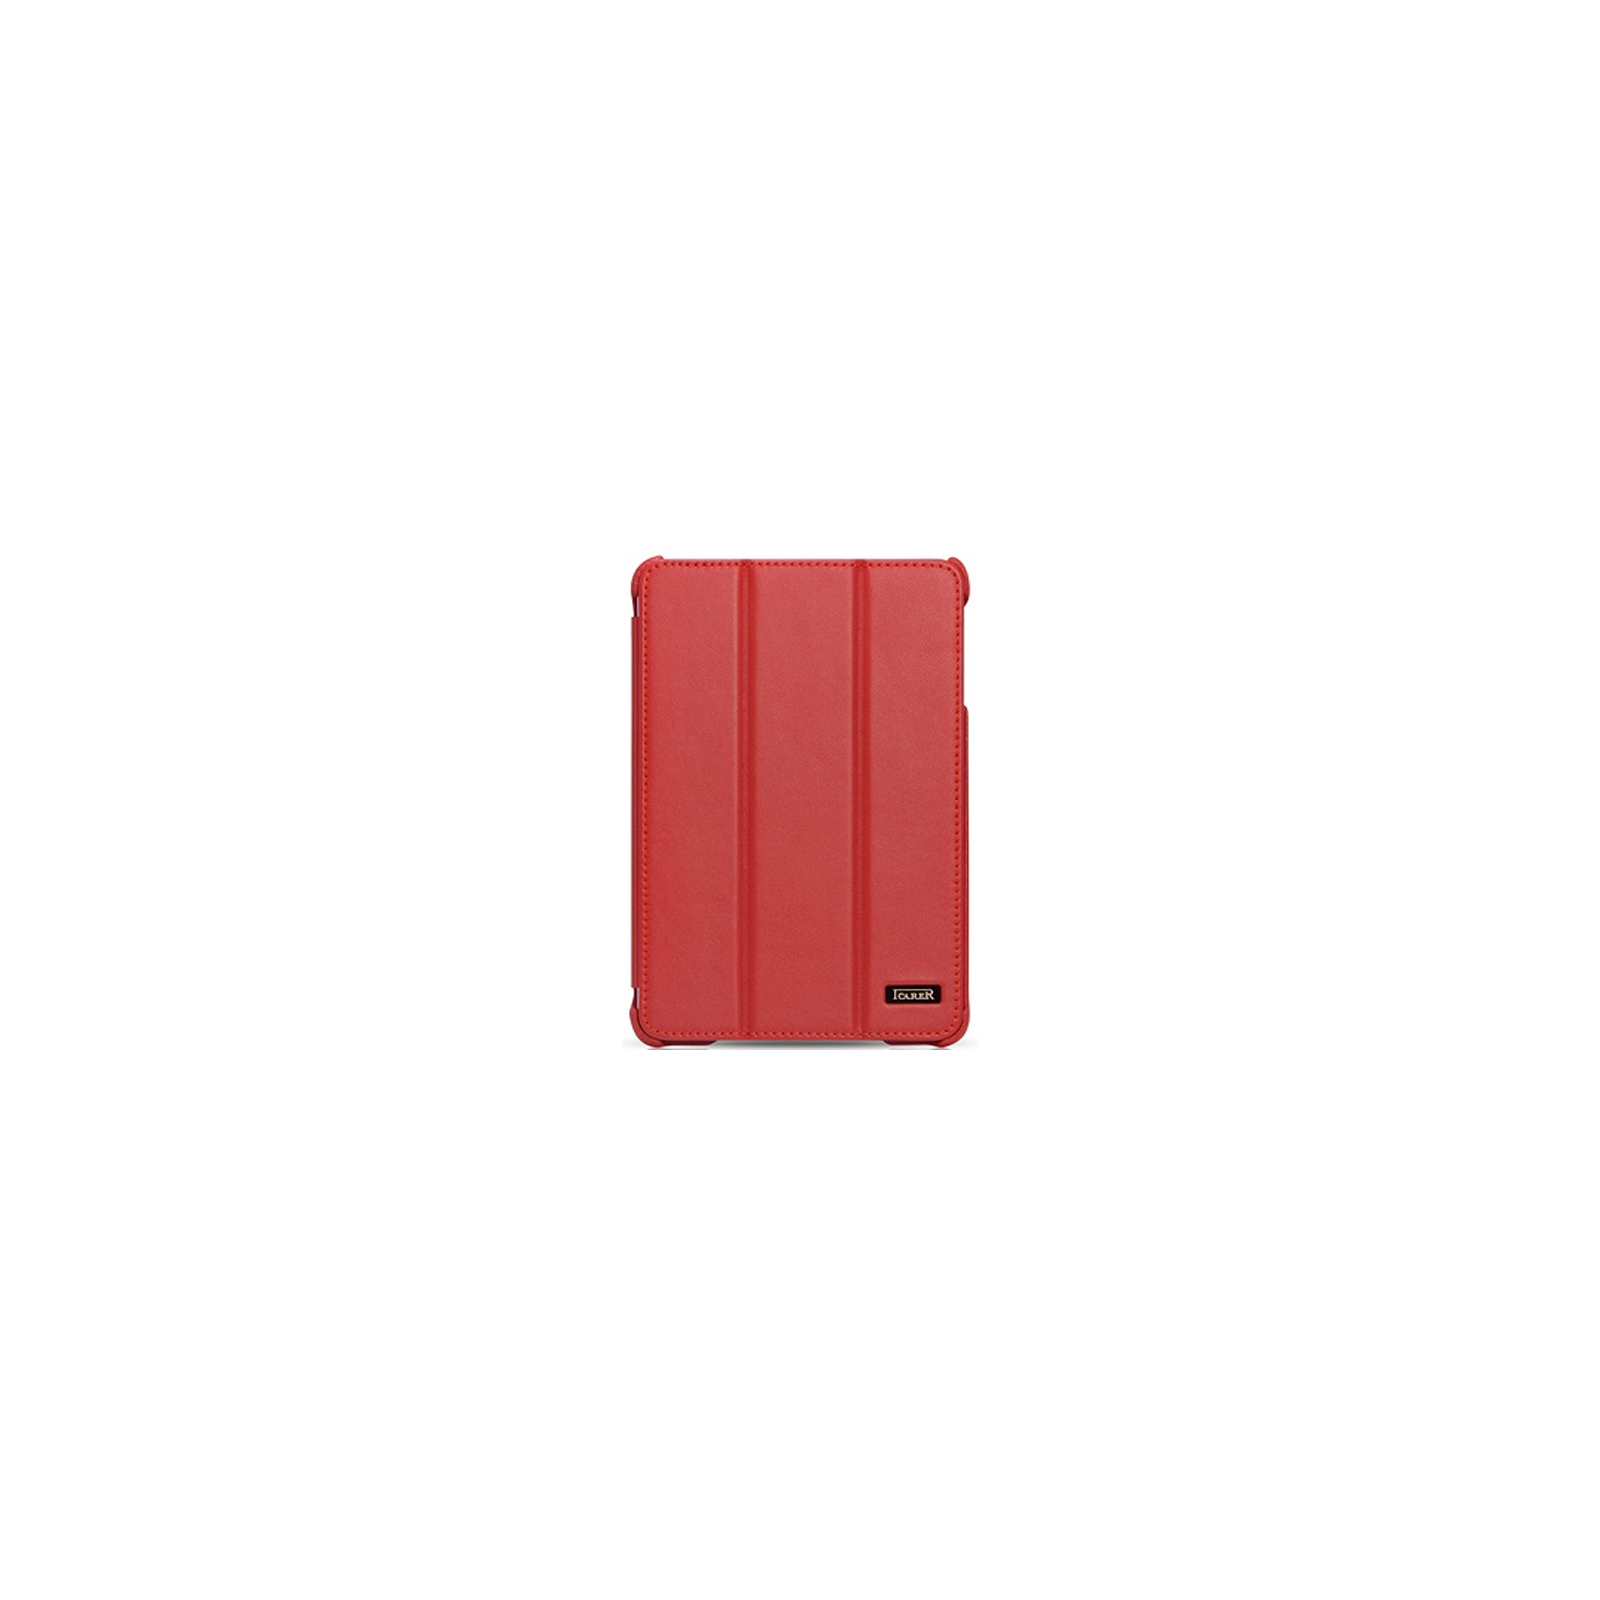 Чехол для планшета i-Carer iPad Mini Retina Ultra thin genuine leather series red (RID794red)